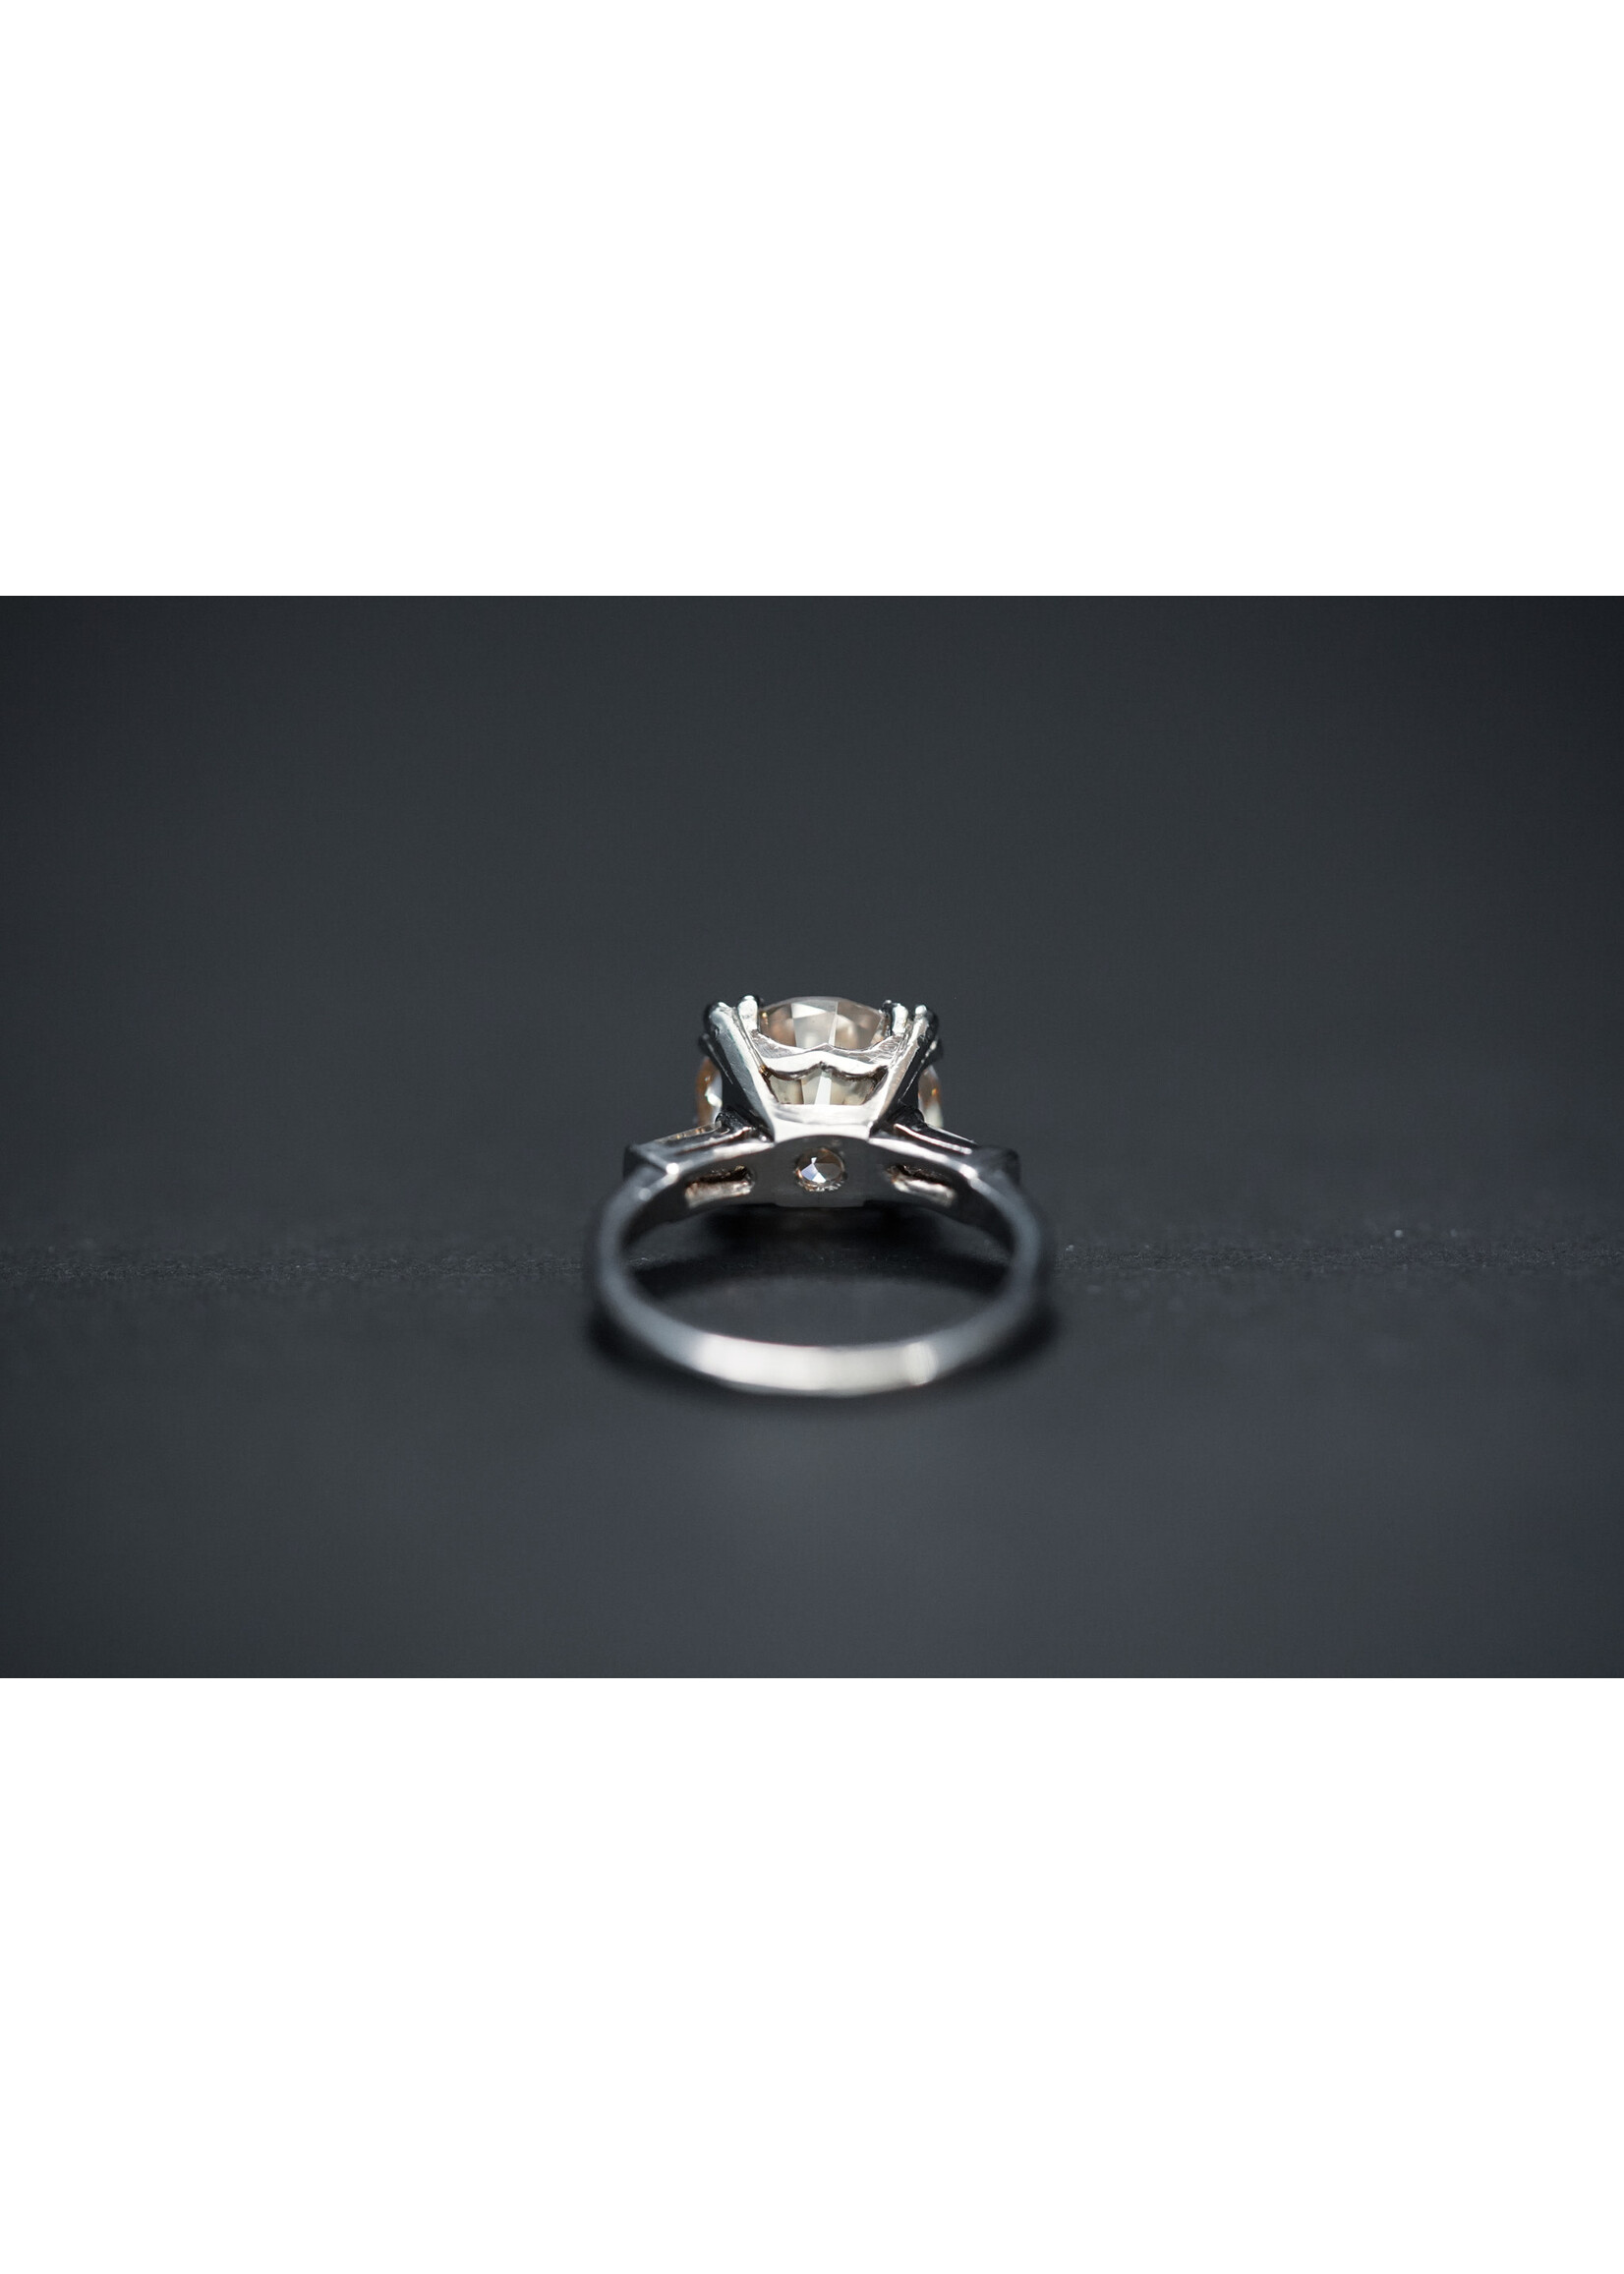 Platinum 5.65g 4.60ctw (4.34ctr) L-M/SI2 Transitional Cut Diamond Vintage Engagement Ring (size 6.25)